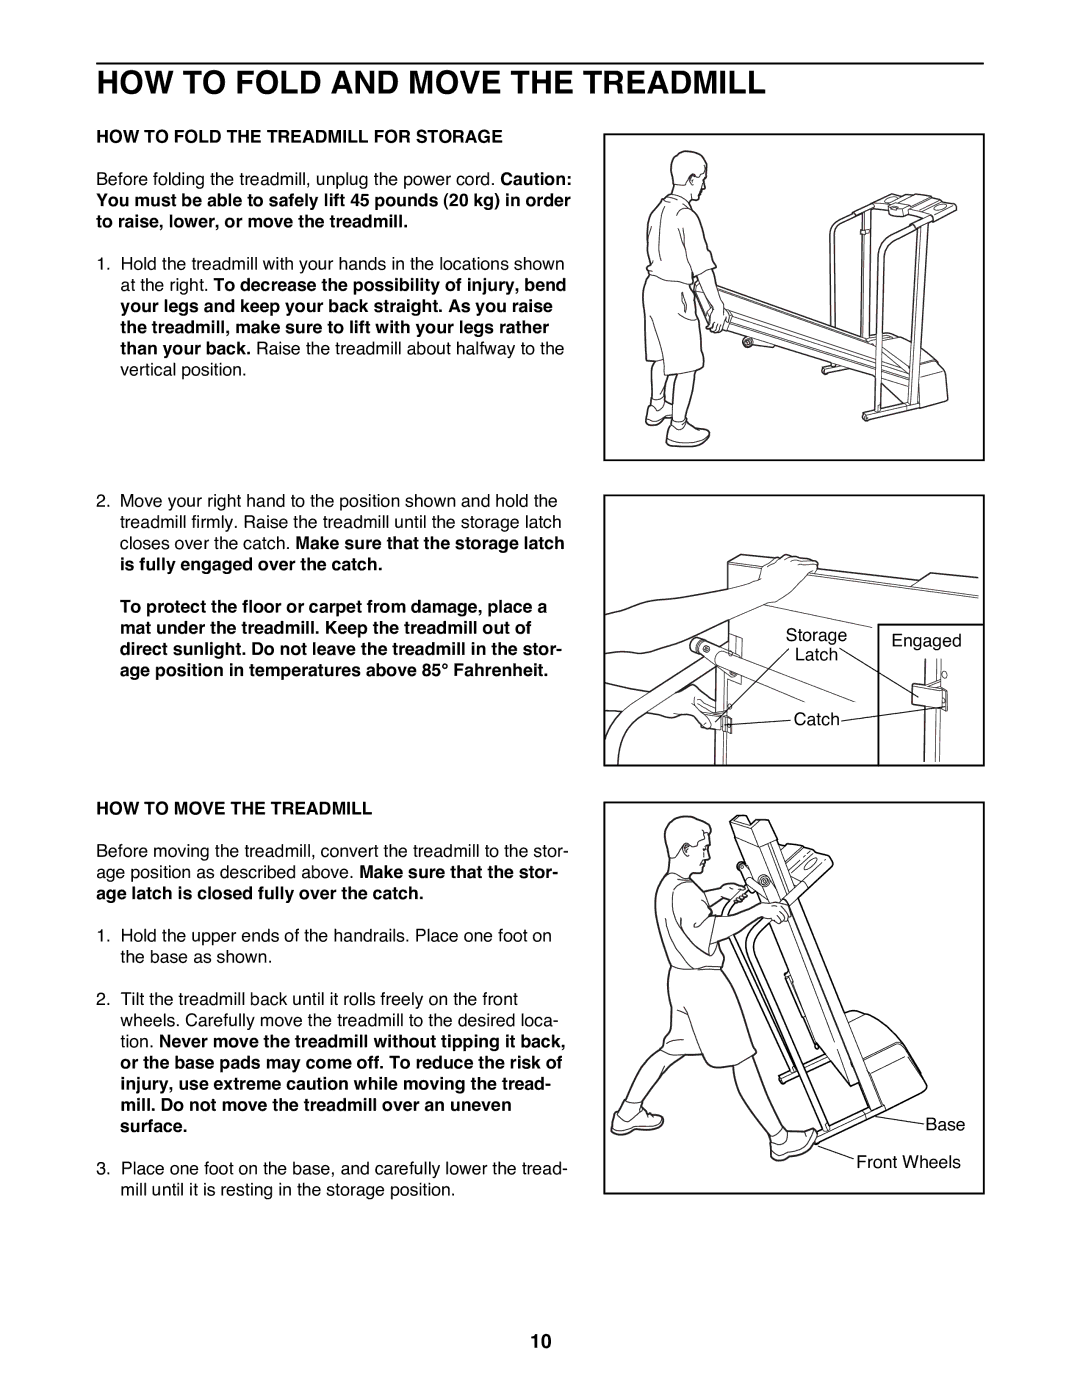 ProForm 831.297062 HOW to Fold and Move the Treadmill, HOW to Fold the Treadmill for Storage, HOW to Move the Treadmill 